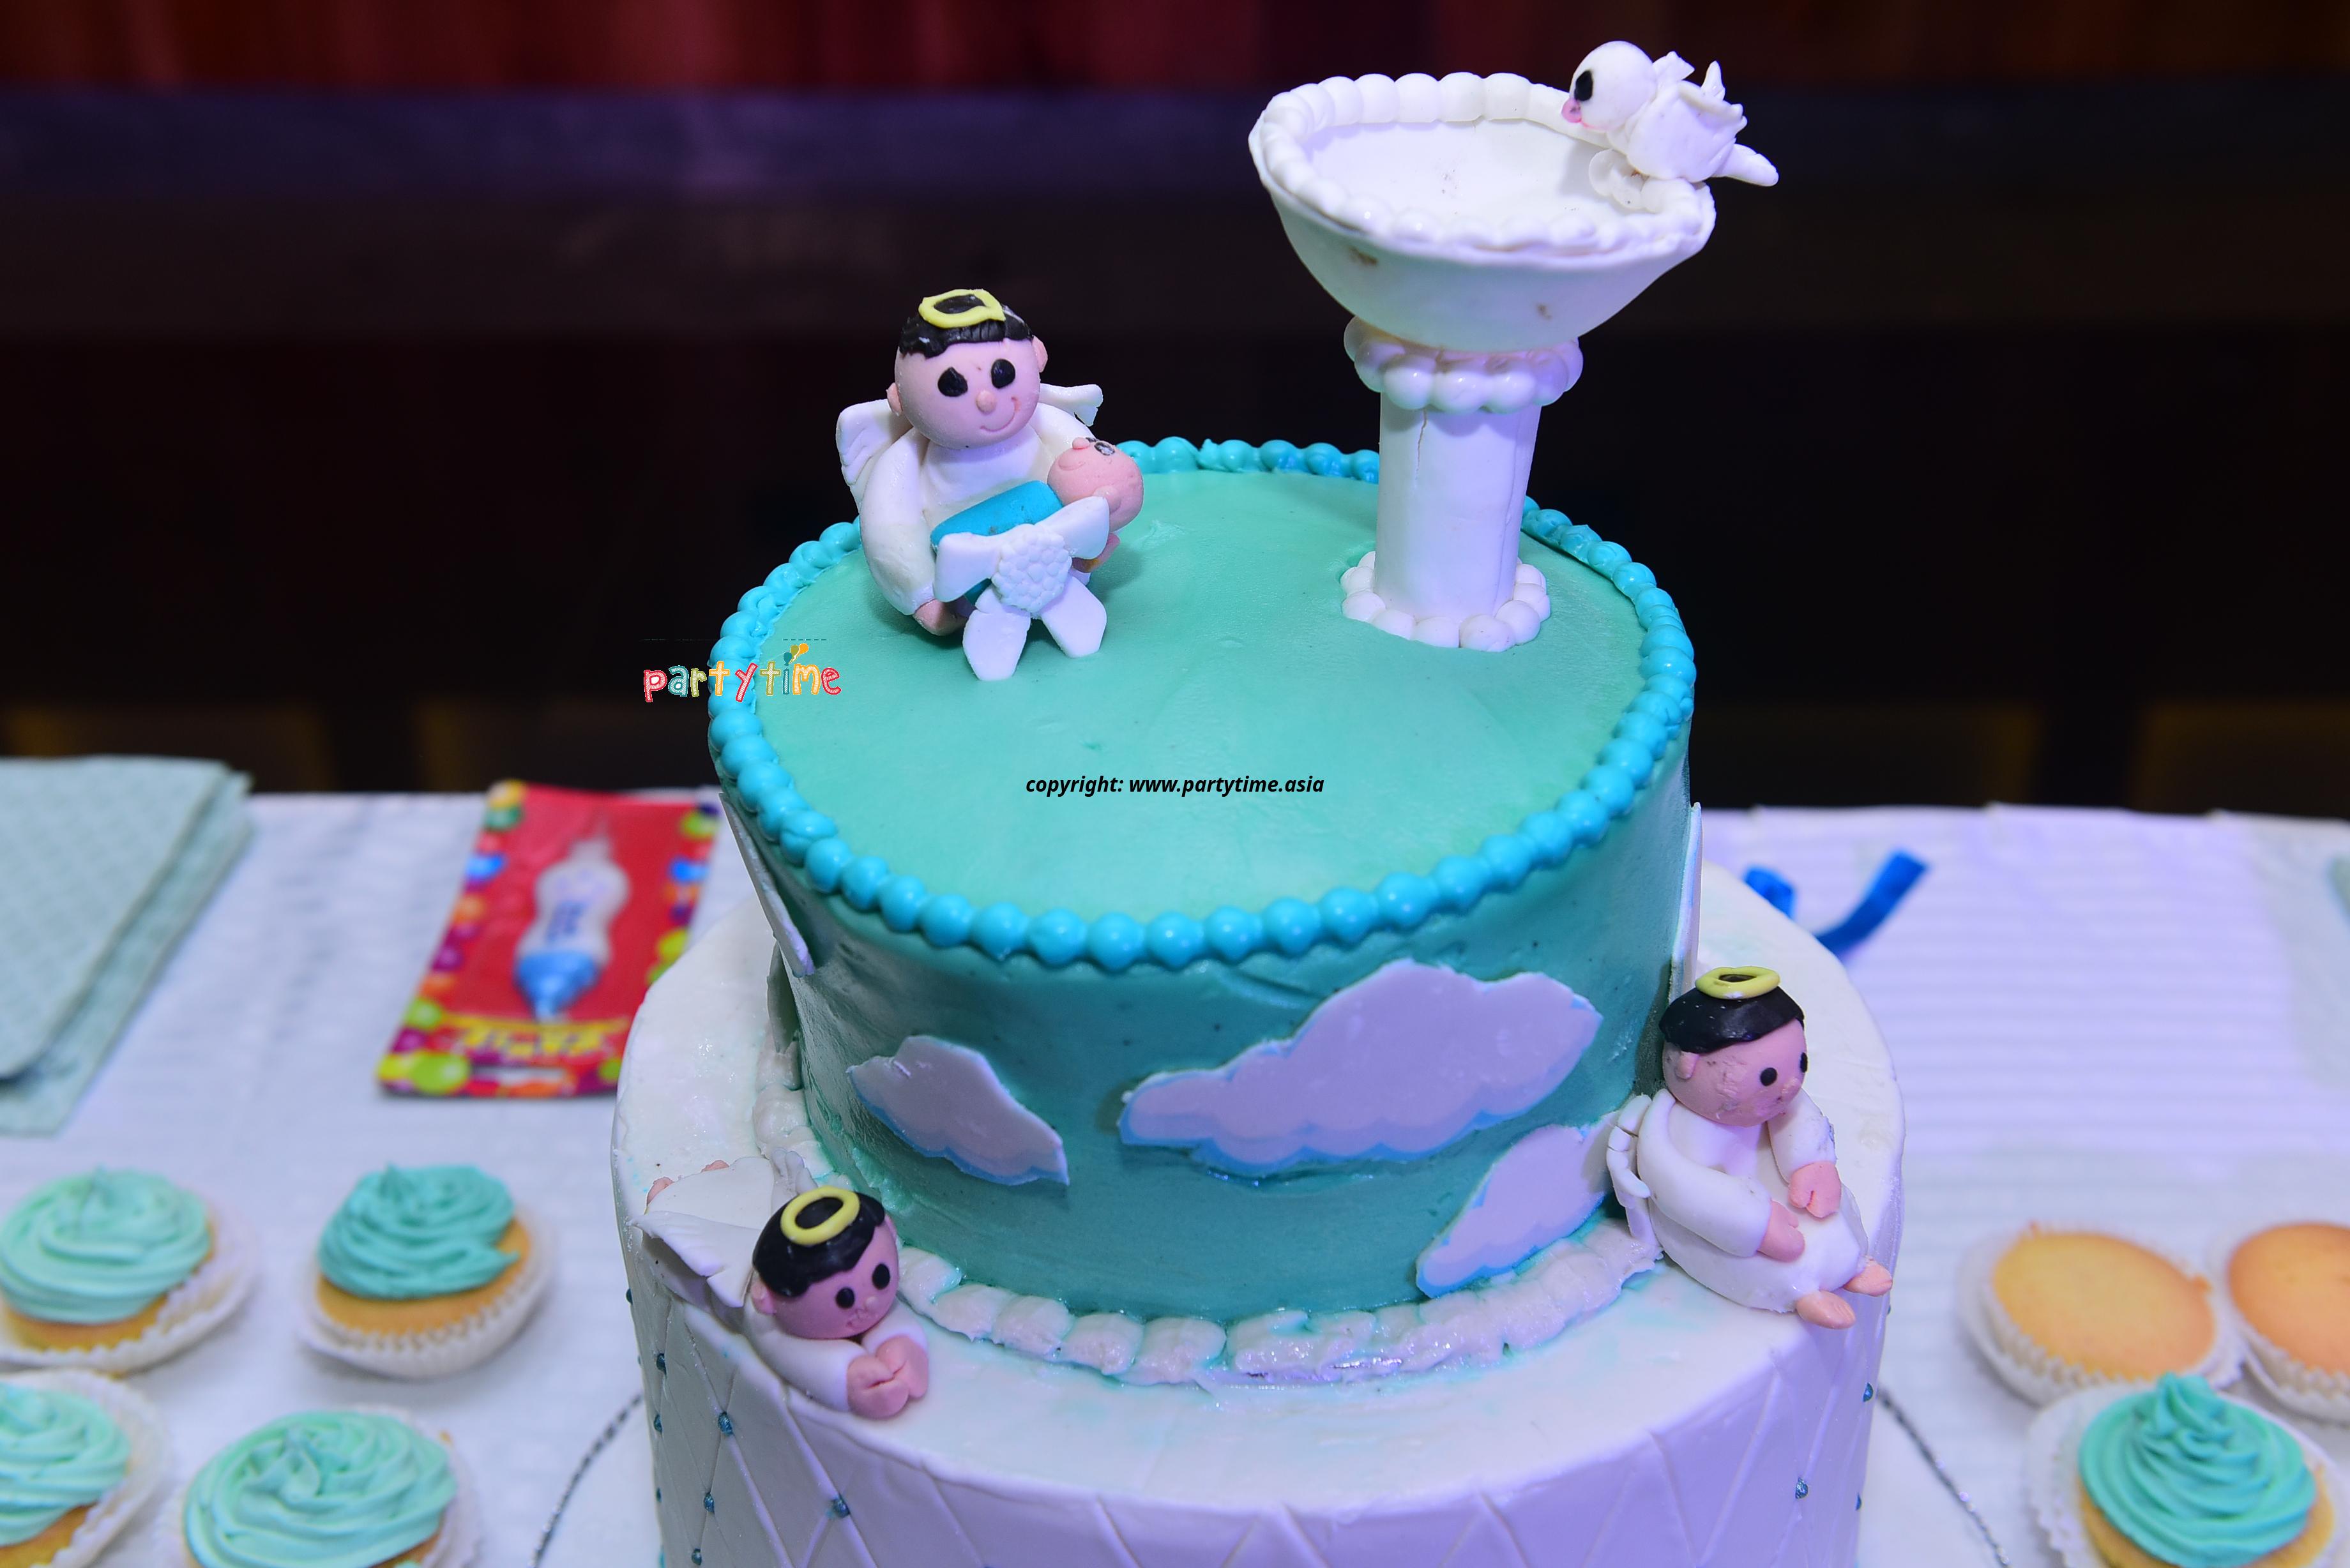 Theme cake and Balloon Decoration - Partytime With Aladin, Kochi, Kerala